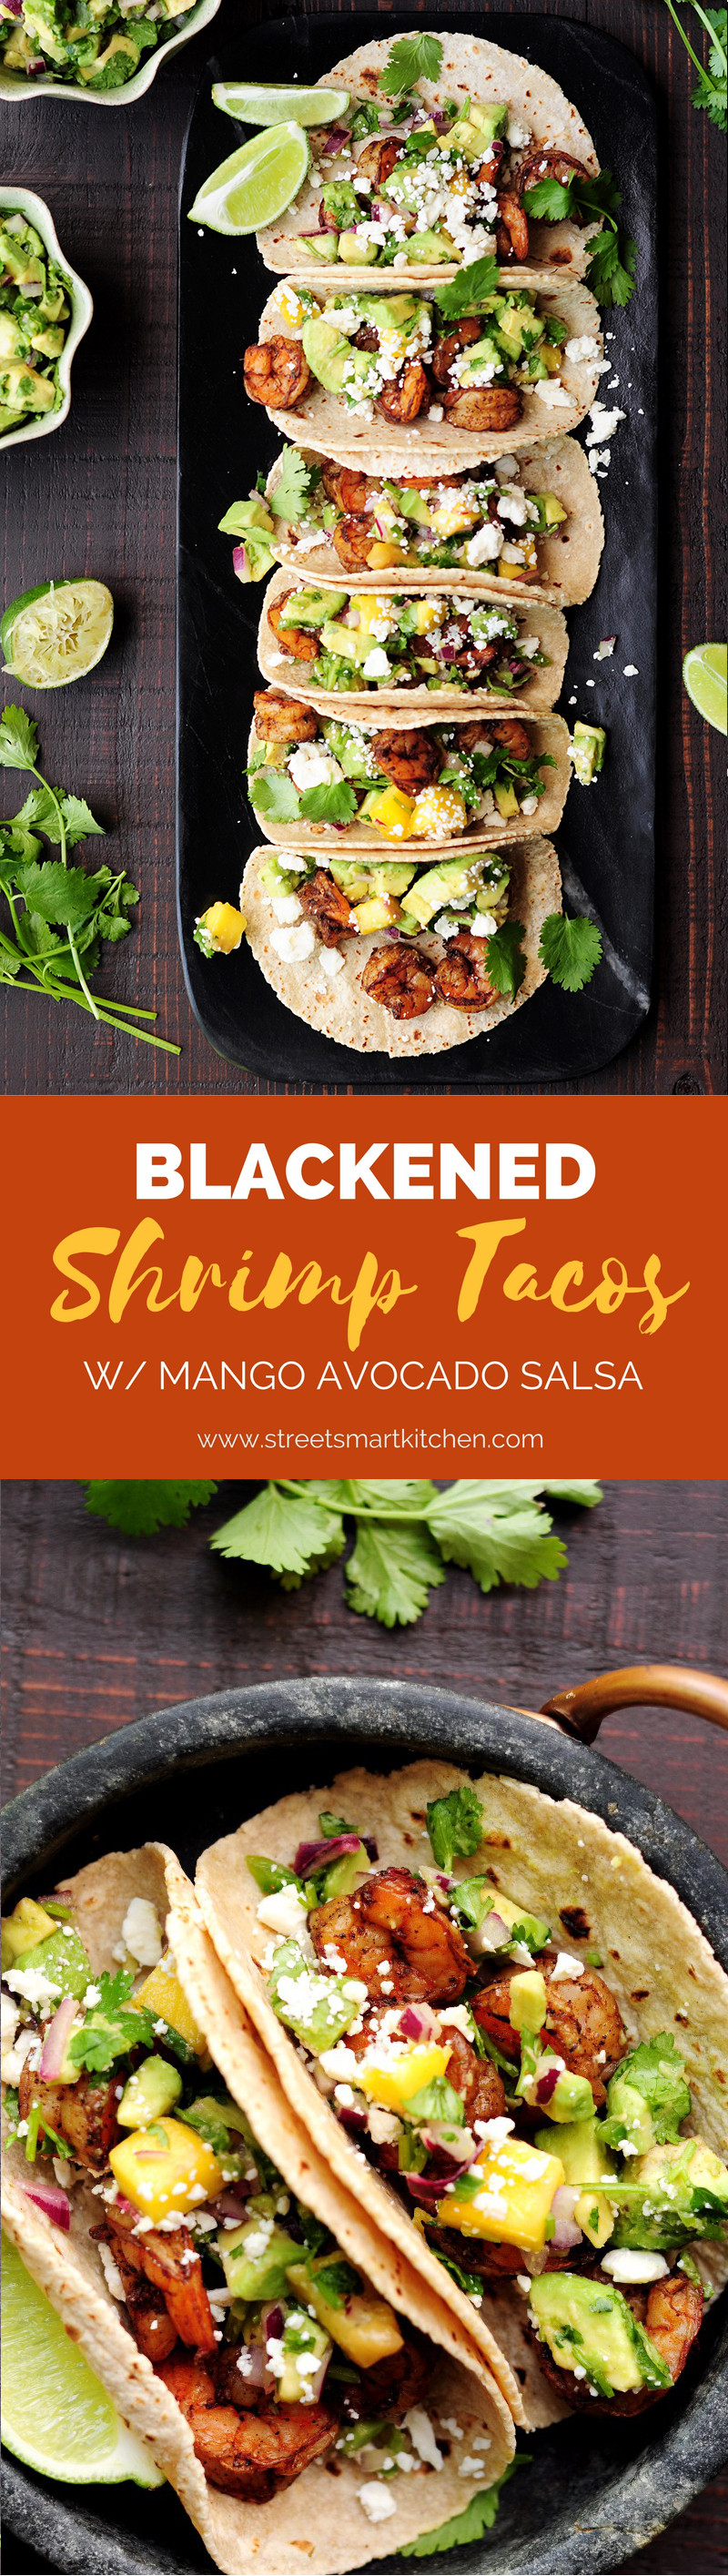 Shrimp tacos made with a homemade blackened seasoning mix, topped with refreshing mango avocado salsa and feta cheese. Yum!